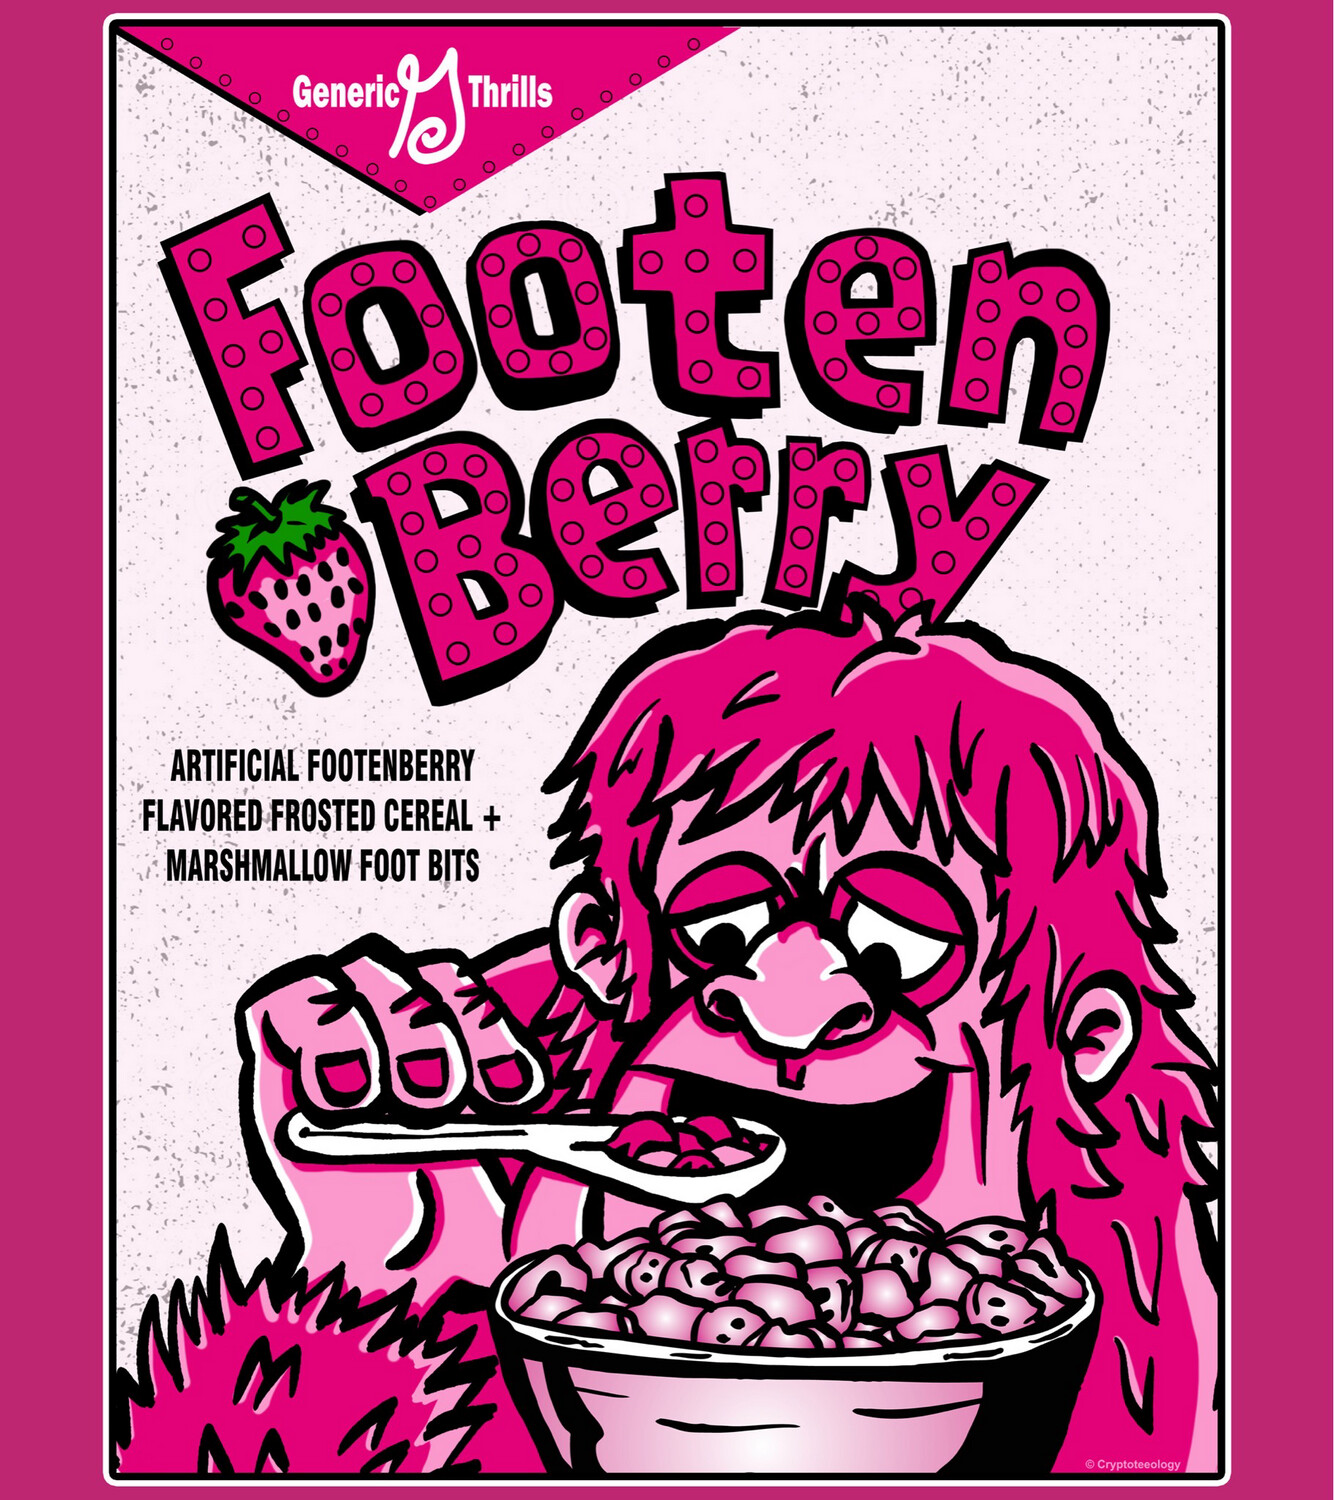 Footen Berry